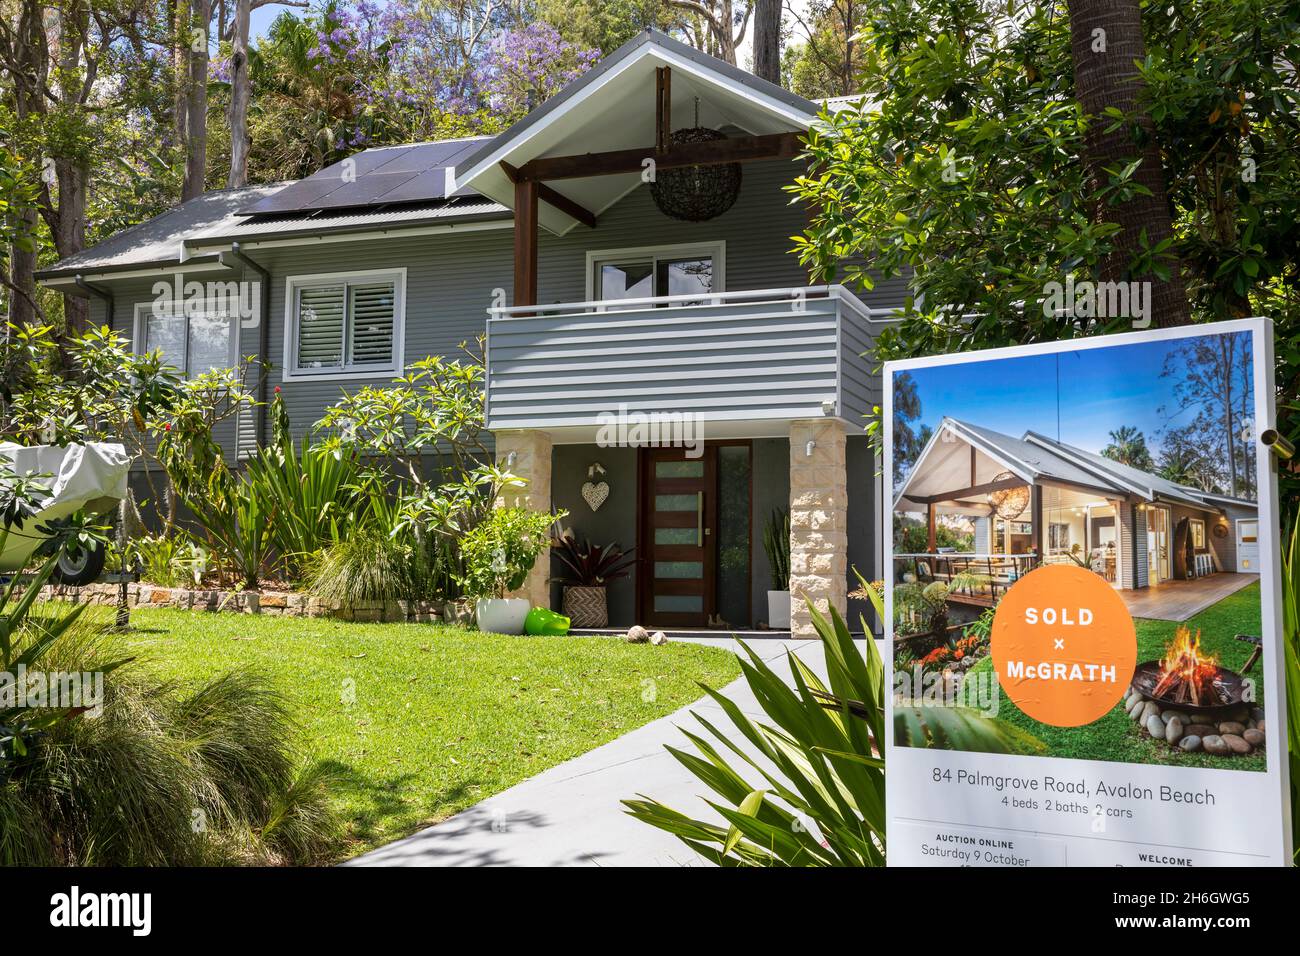 Australian detached luxury home in Avalon Beach sold by estate agent McGrath,Sydney,Australia Stock Photo